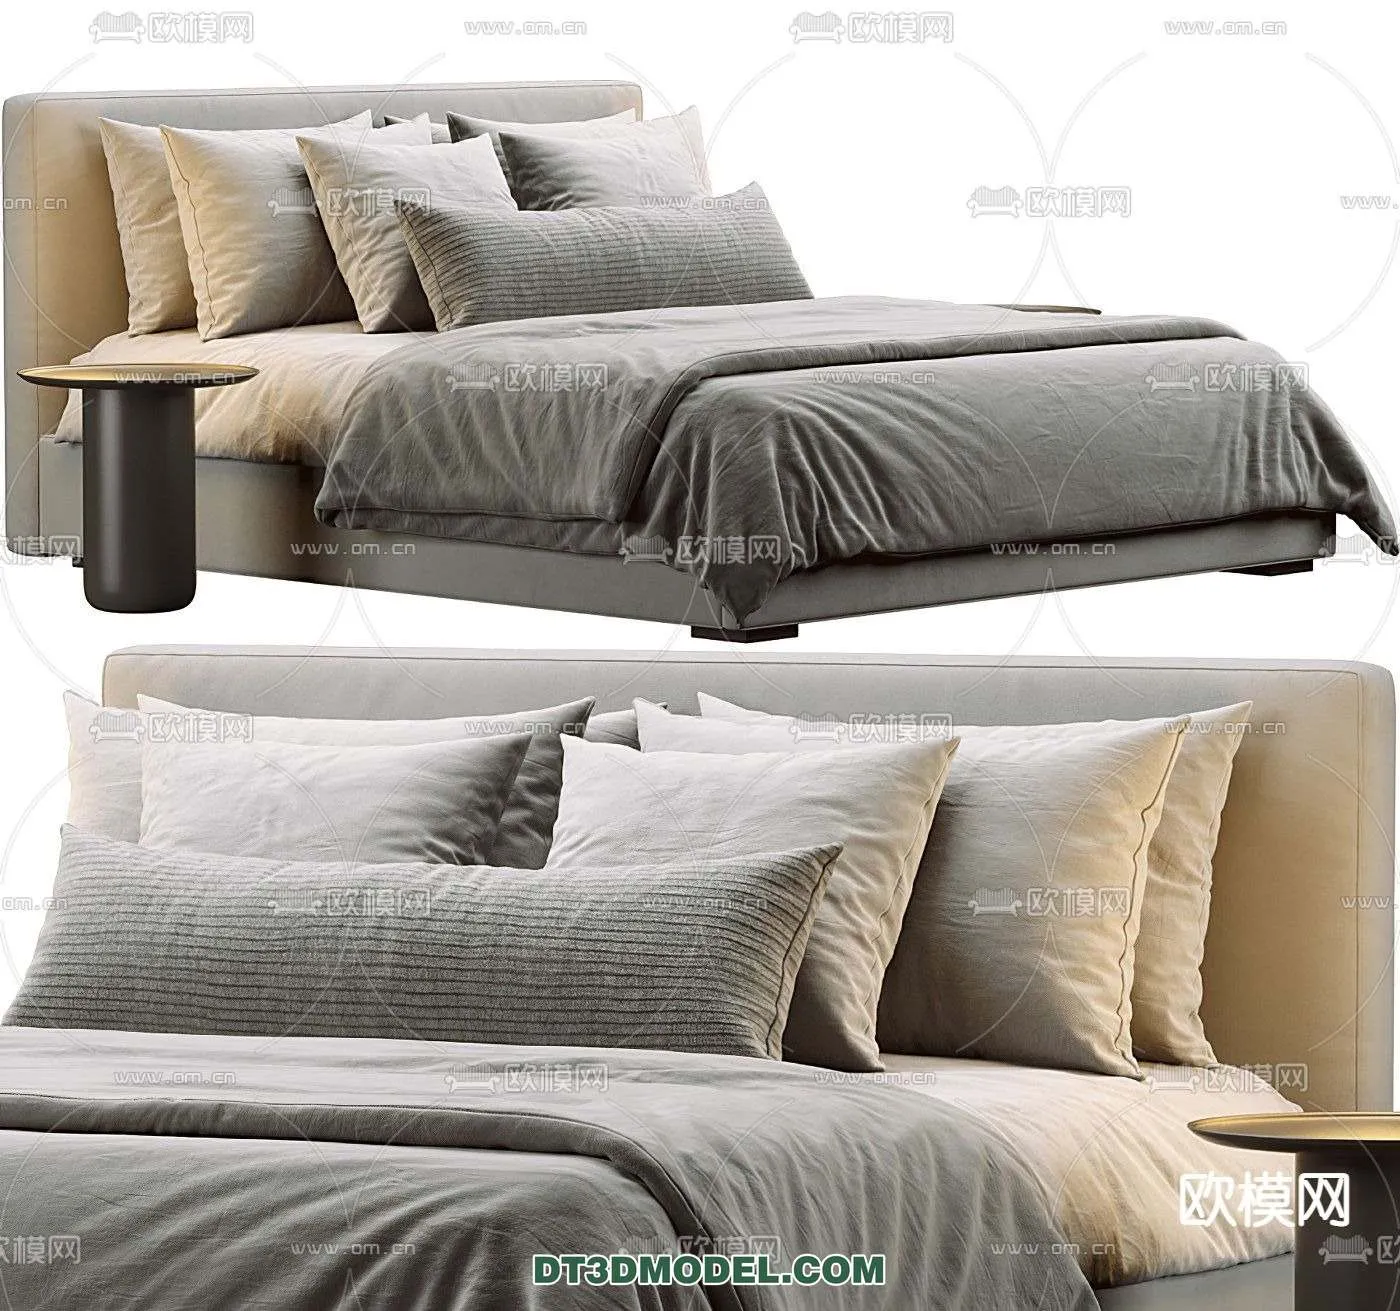 Double Bed 3D Models – 0059